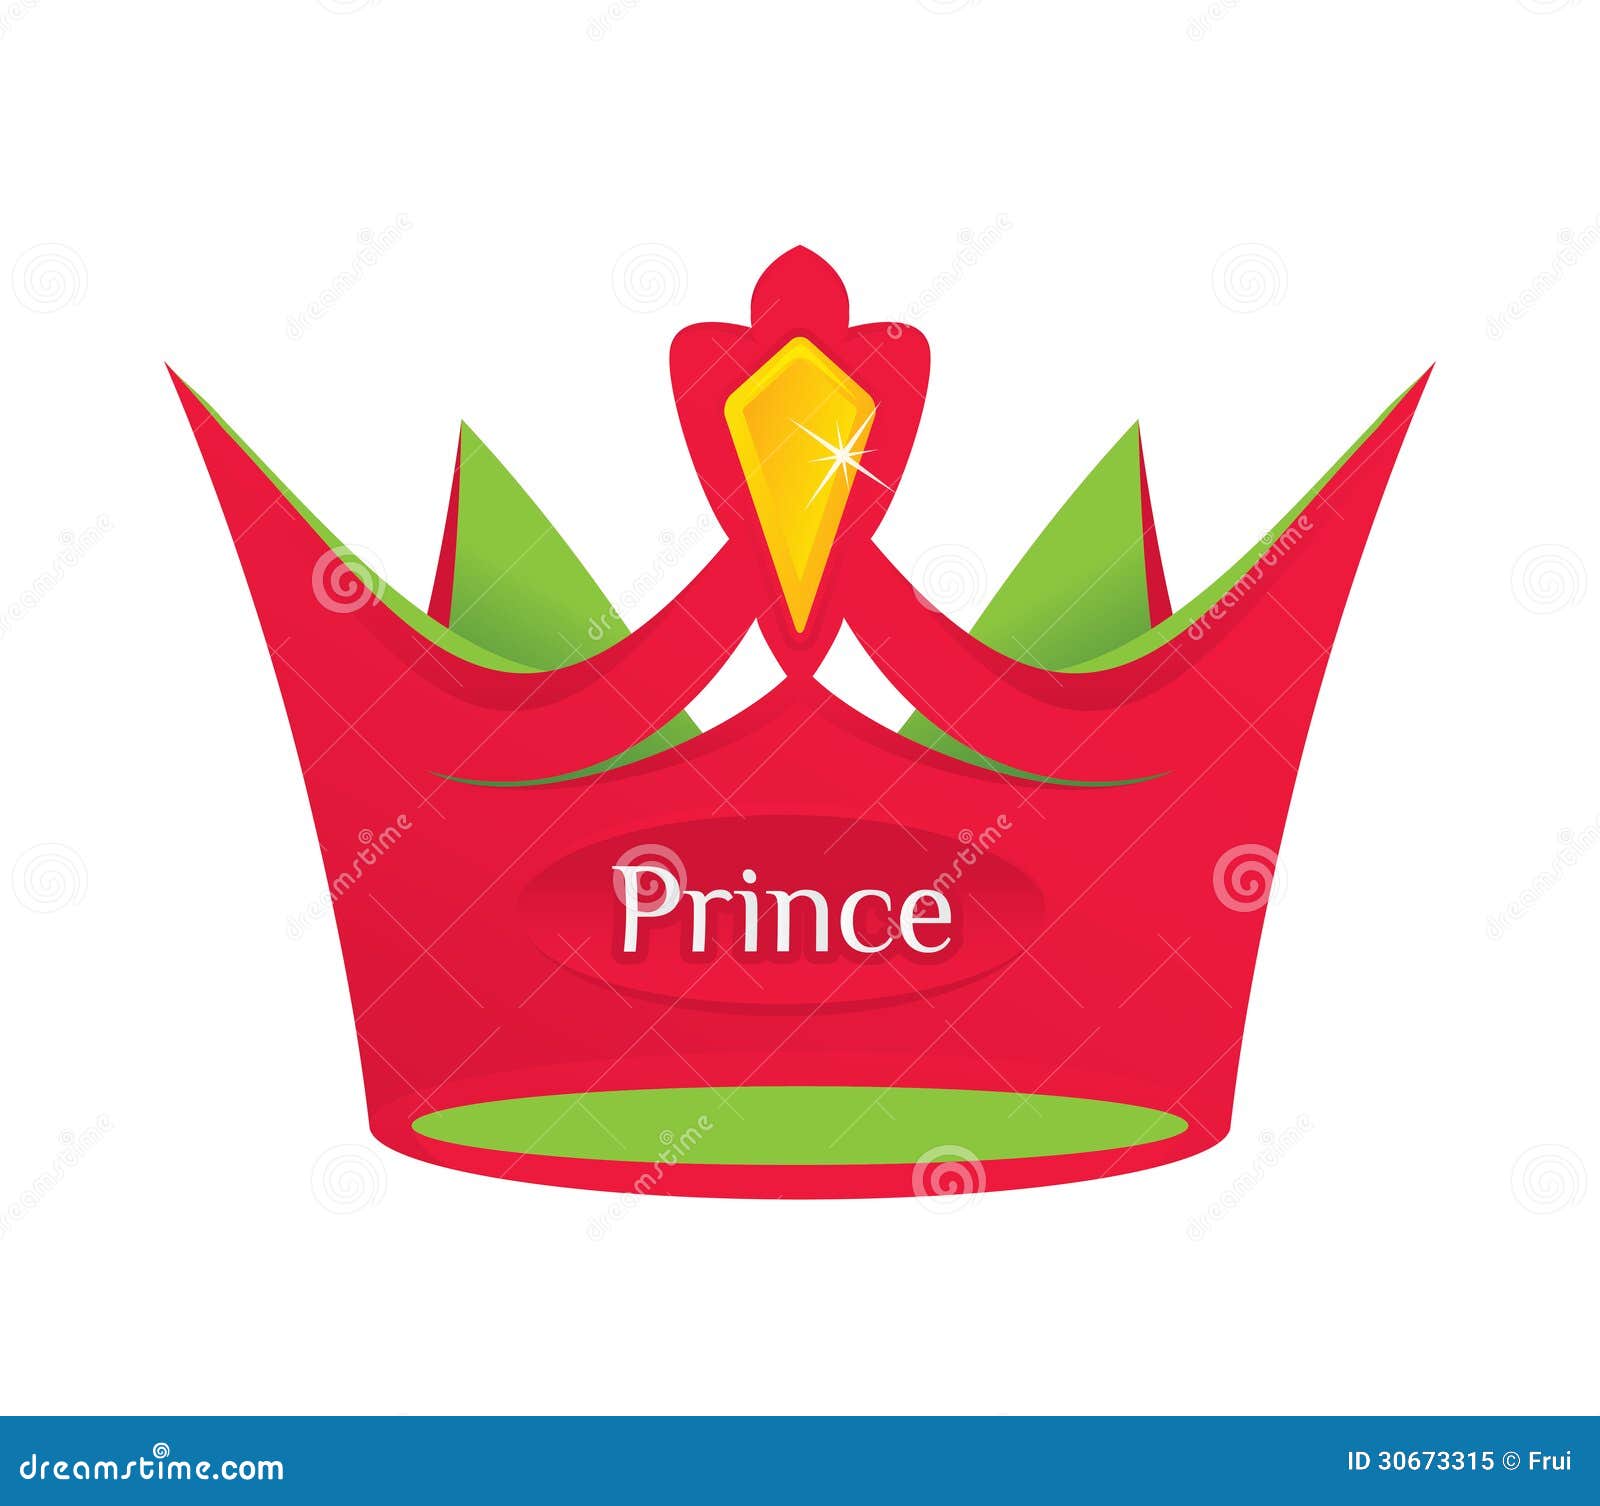 Prince Crown Images  Free Download on Freepik